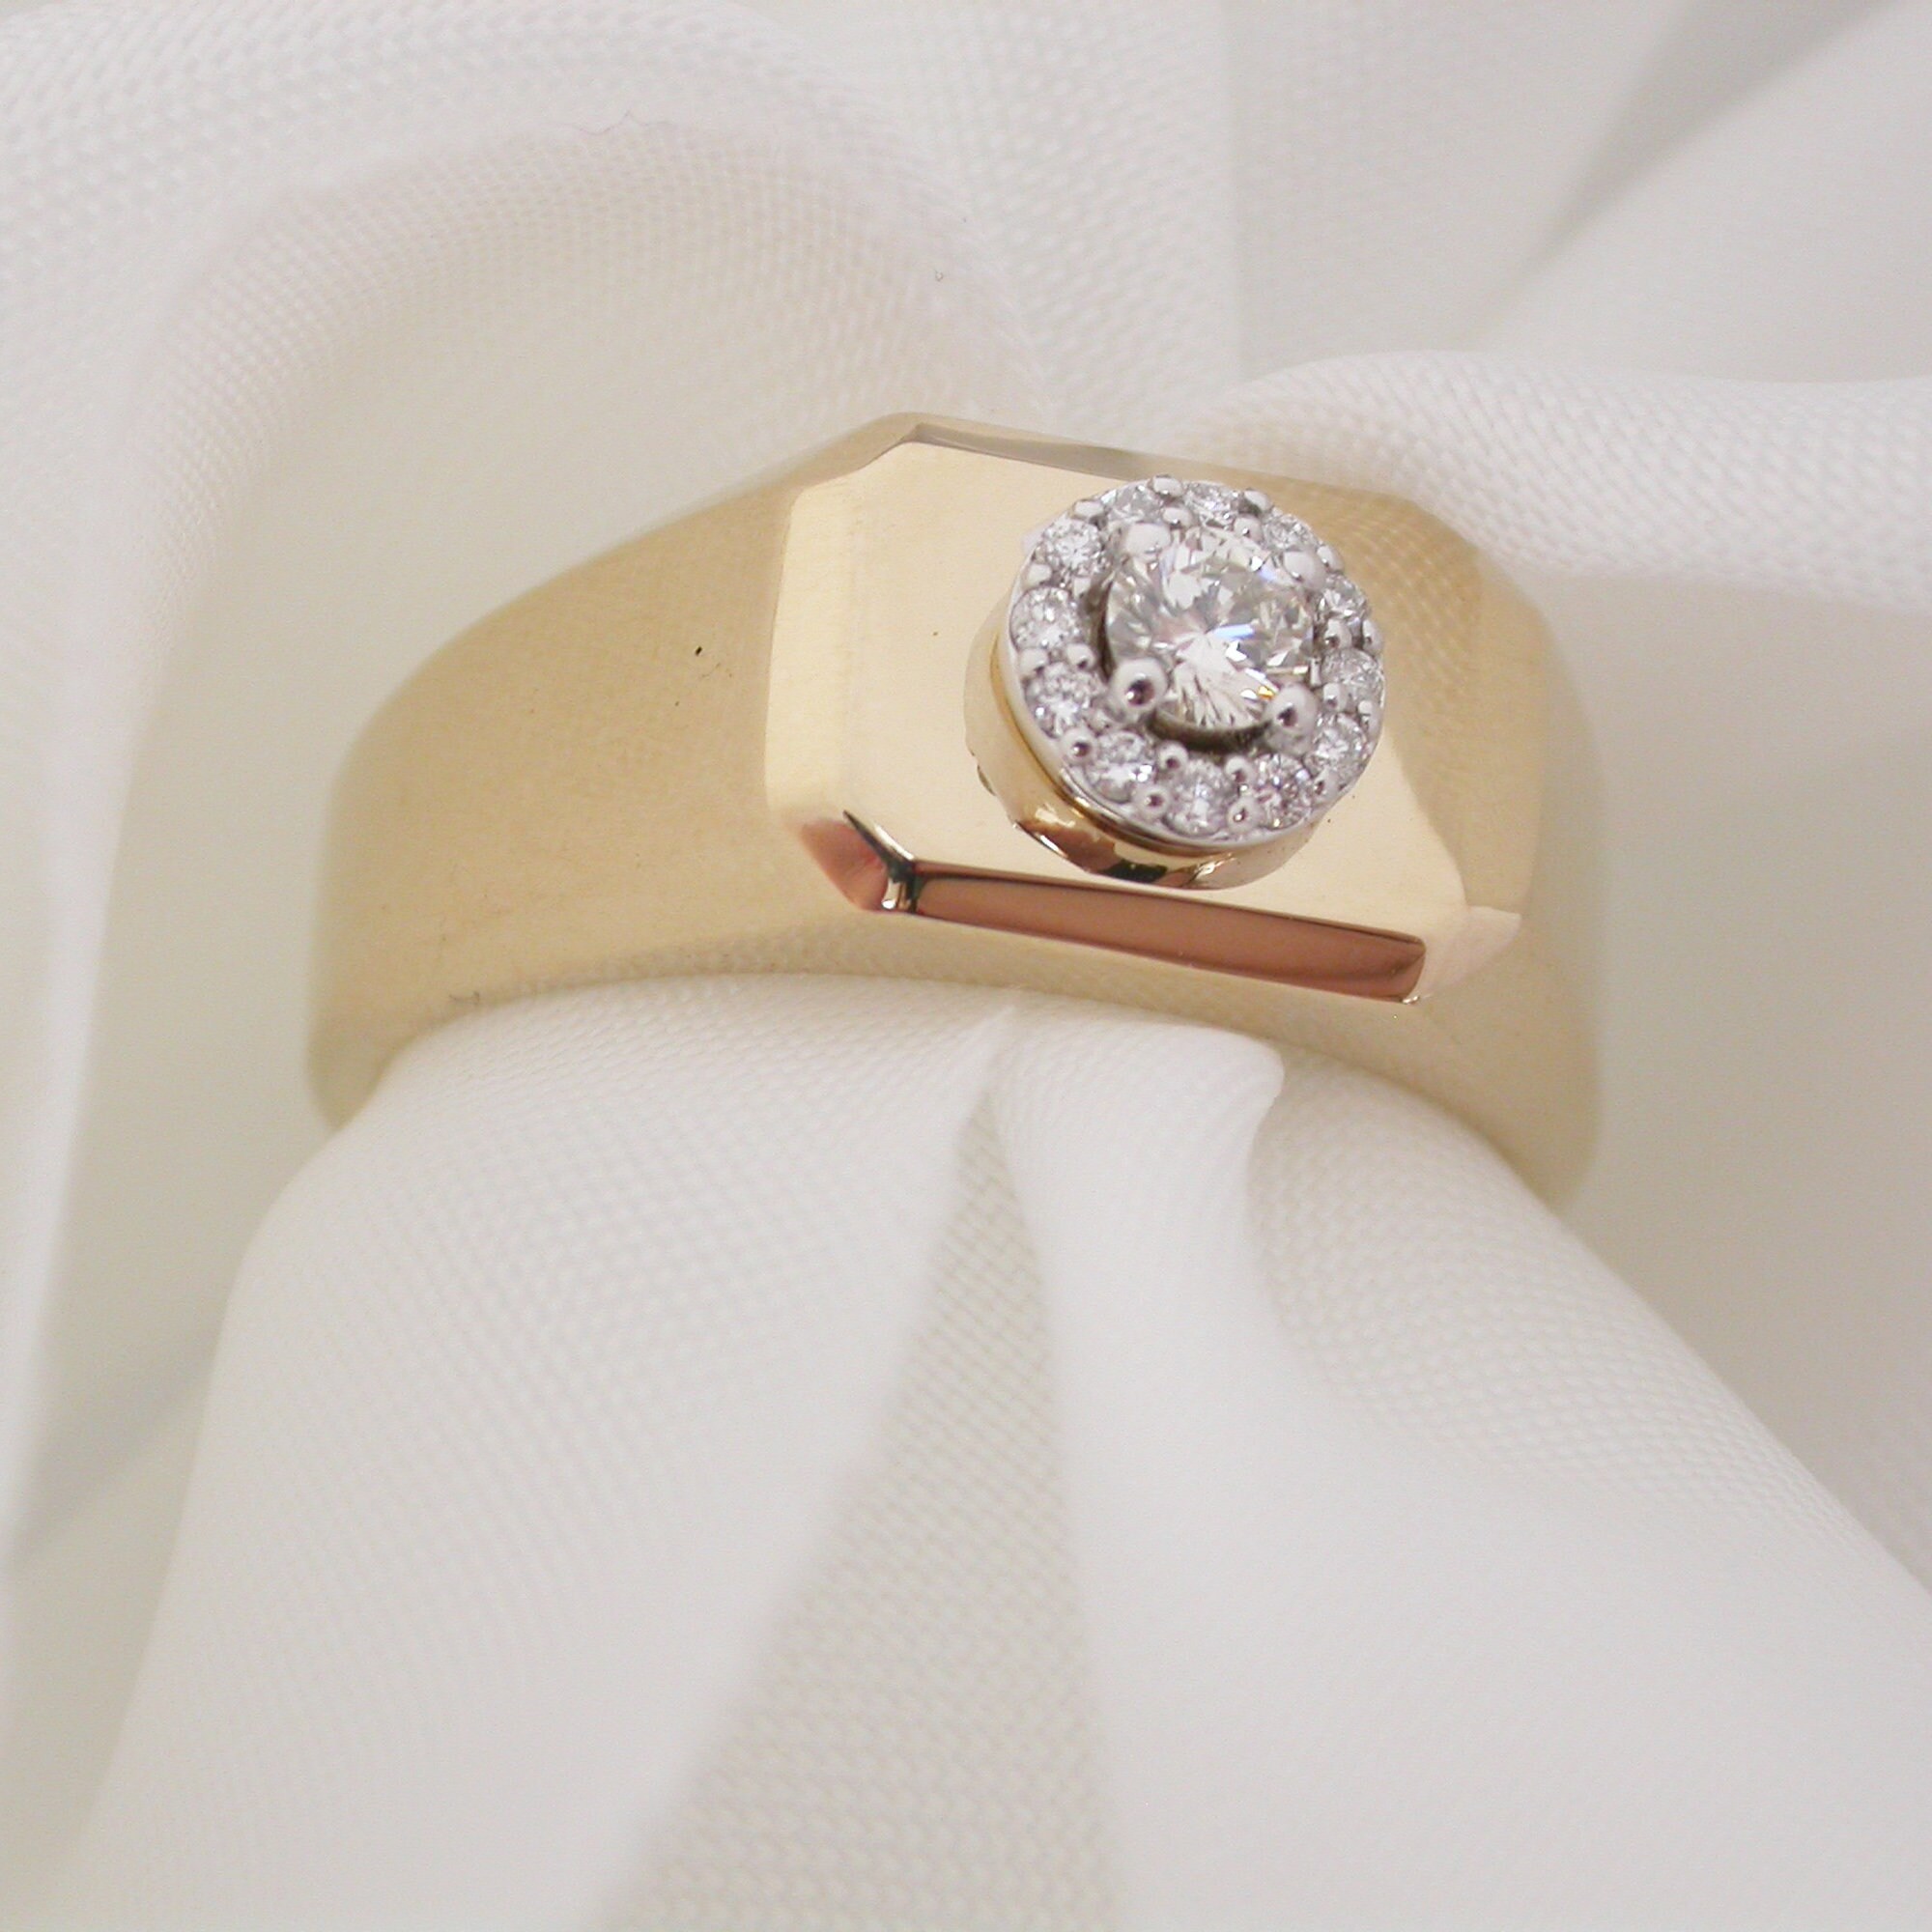 Gold Signet Ring 14k Solid Gold Diamond Gemstone Ring Special | Etsy